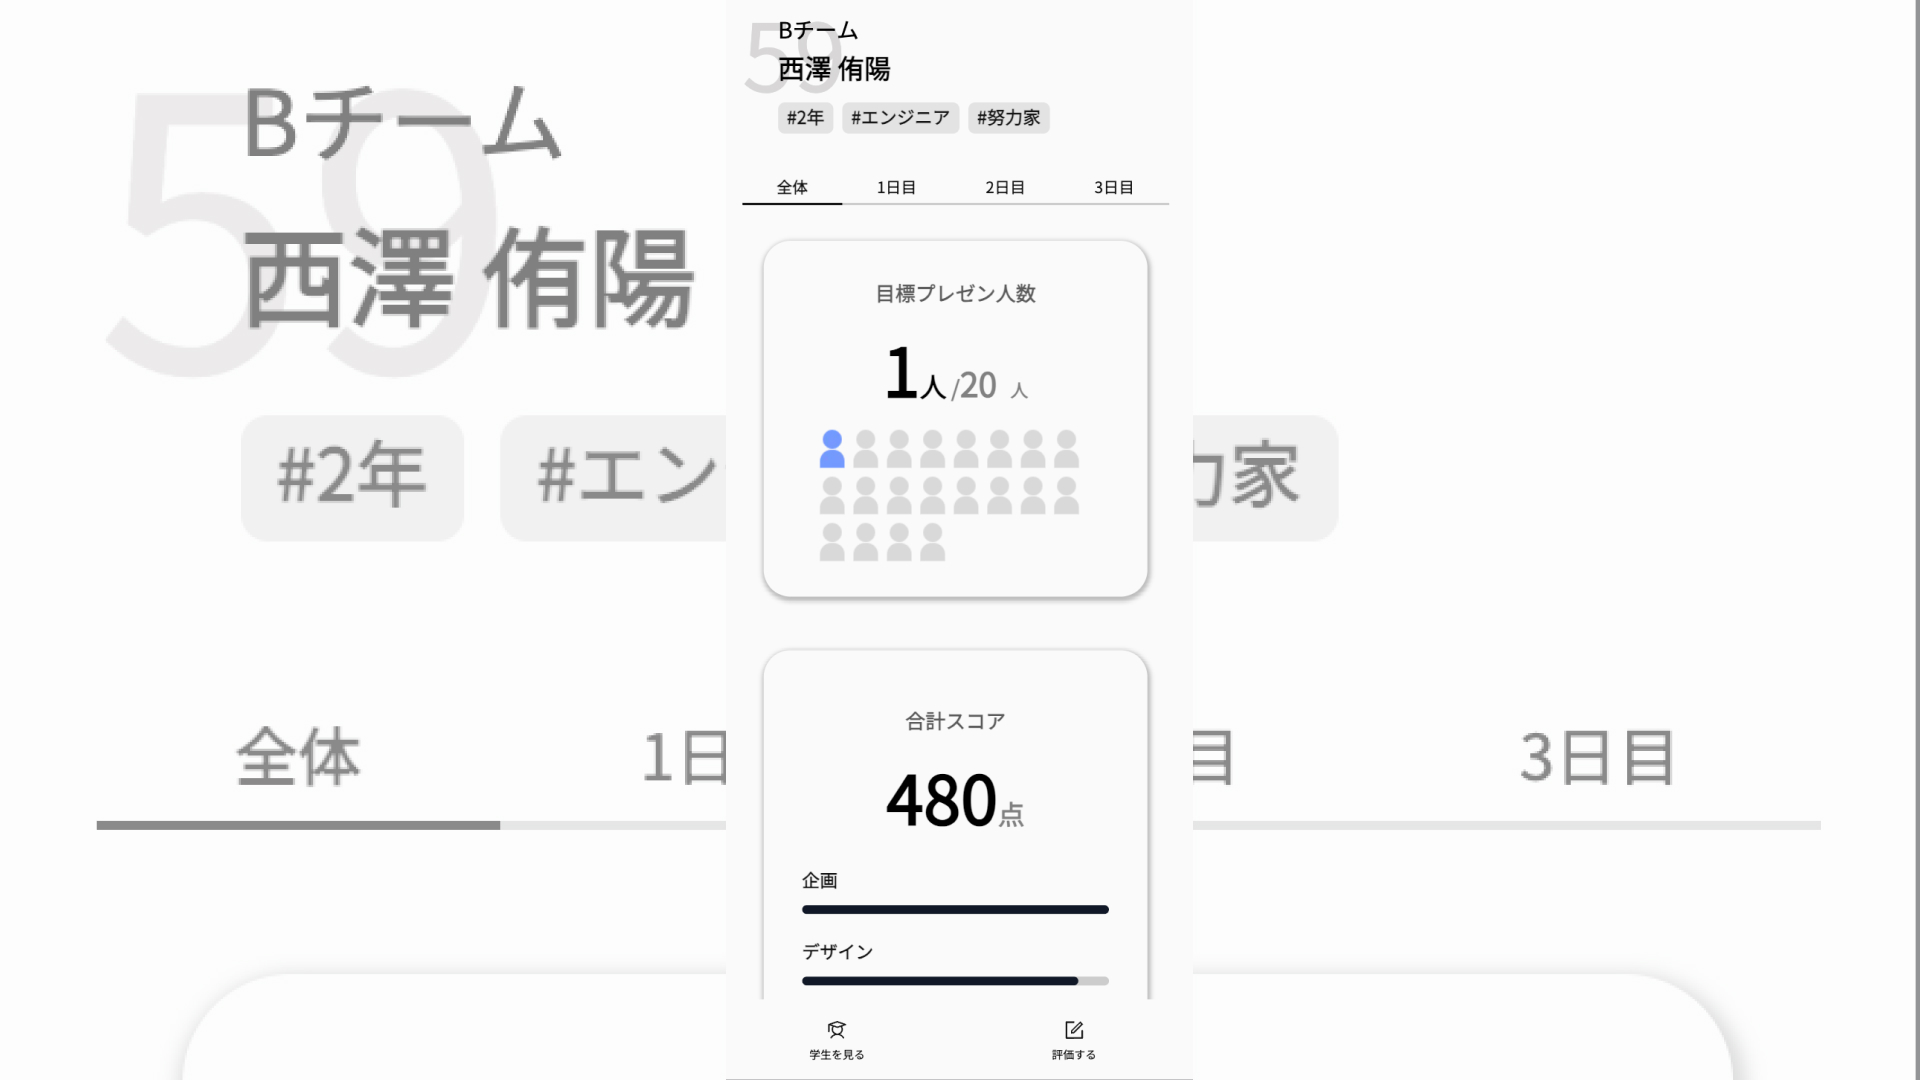 Webデザイン科 2年 西澤 侑陽の作品ファーストビュー